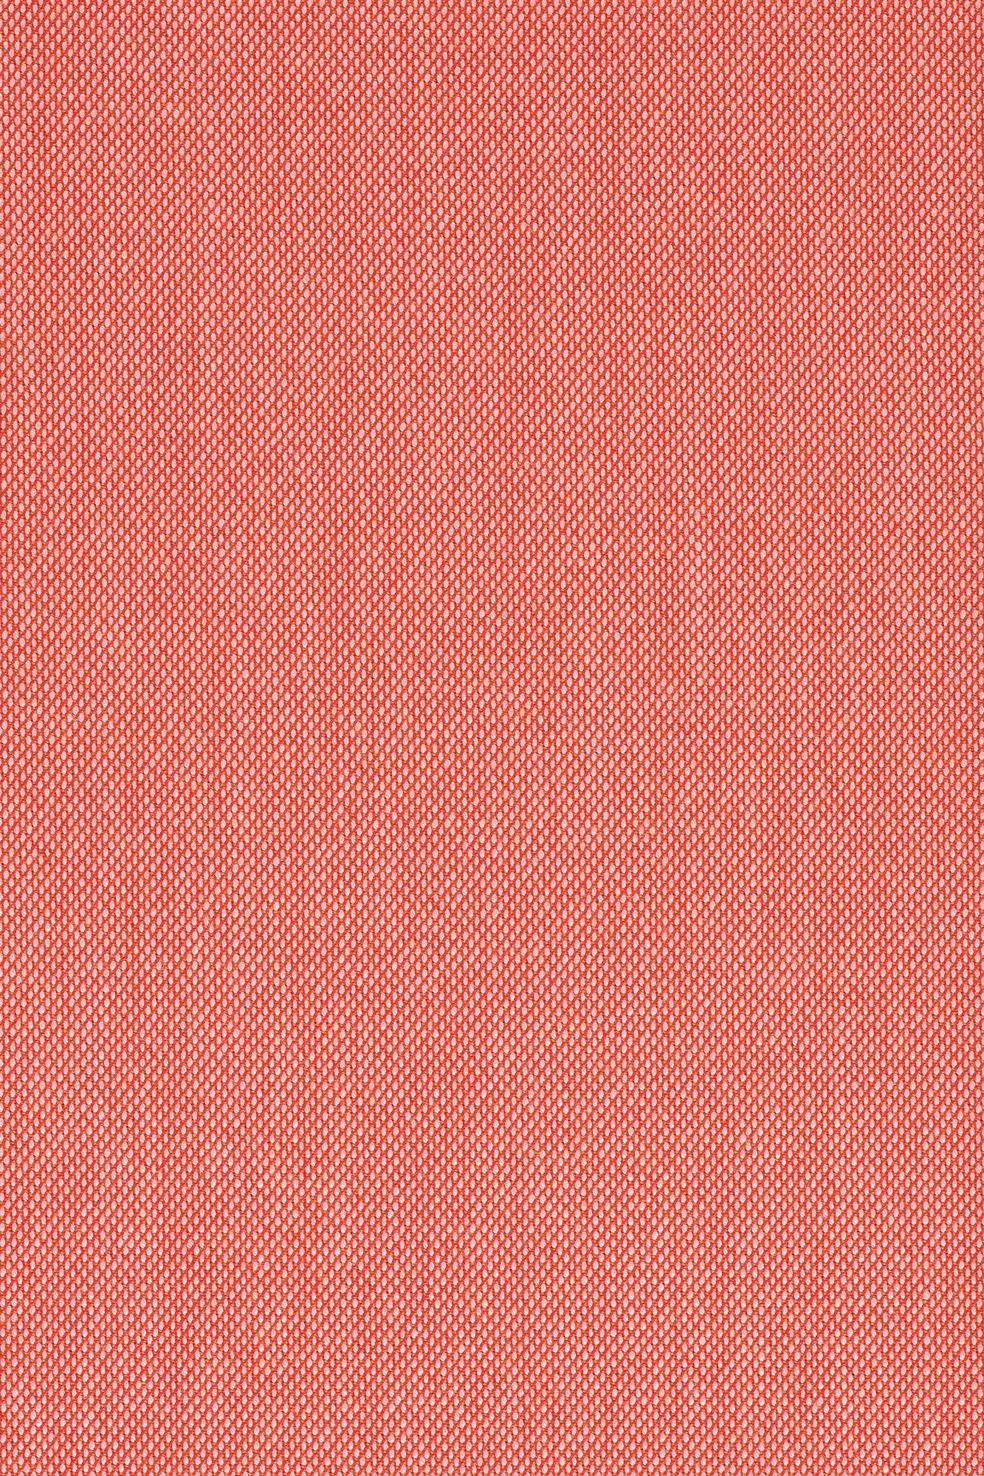 Fabric sample Steelcut Trio 3 526 pink